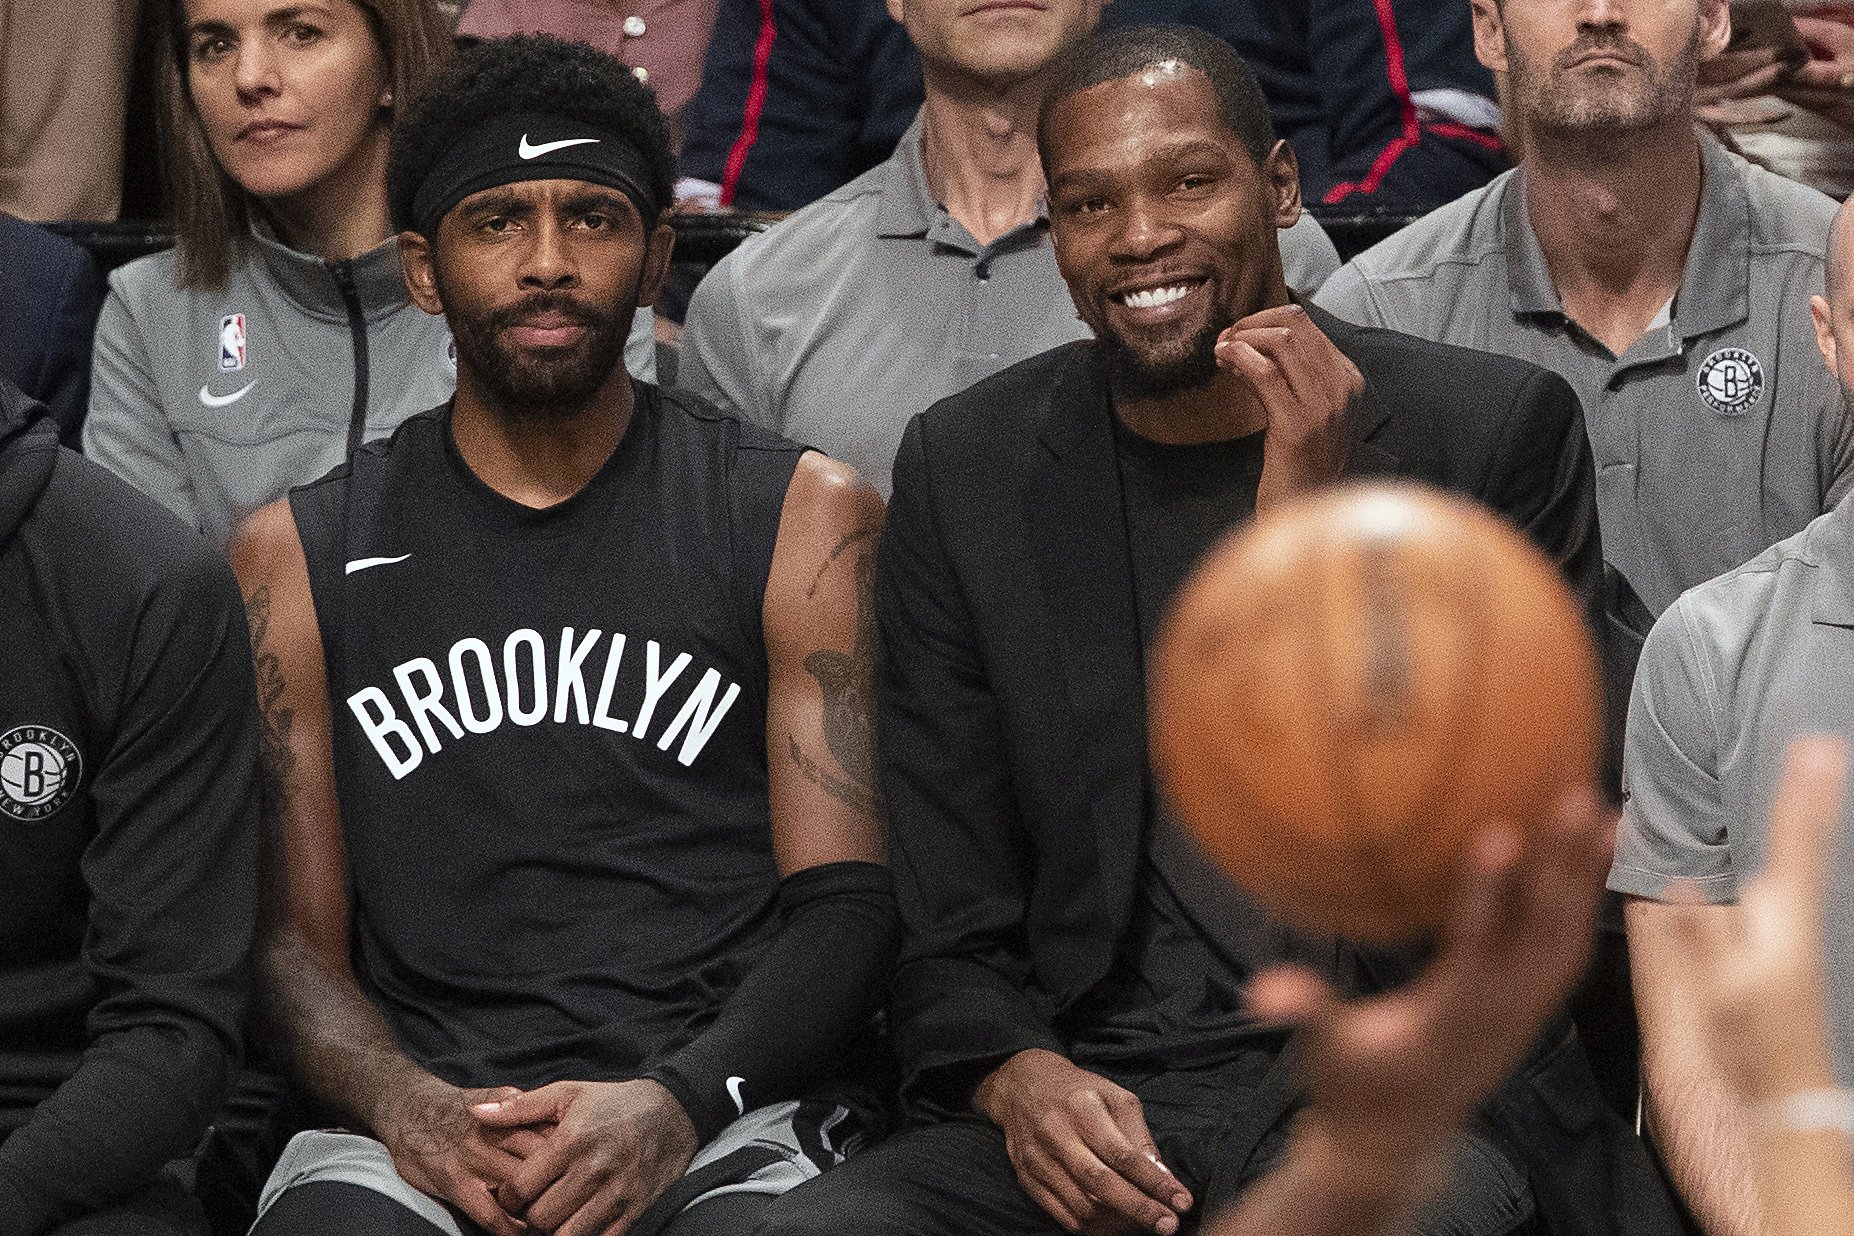 Brooklyn-bound -- KD, Kyrie announce Nets moves - ESPN